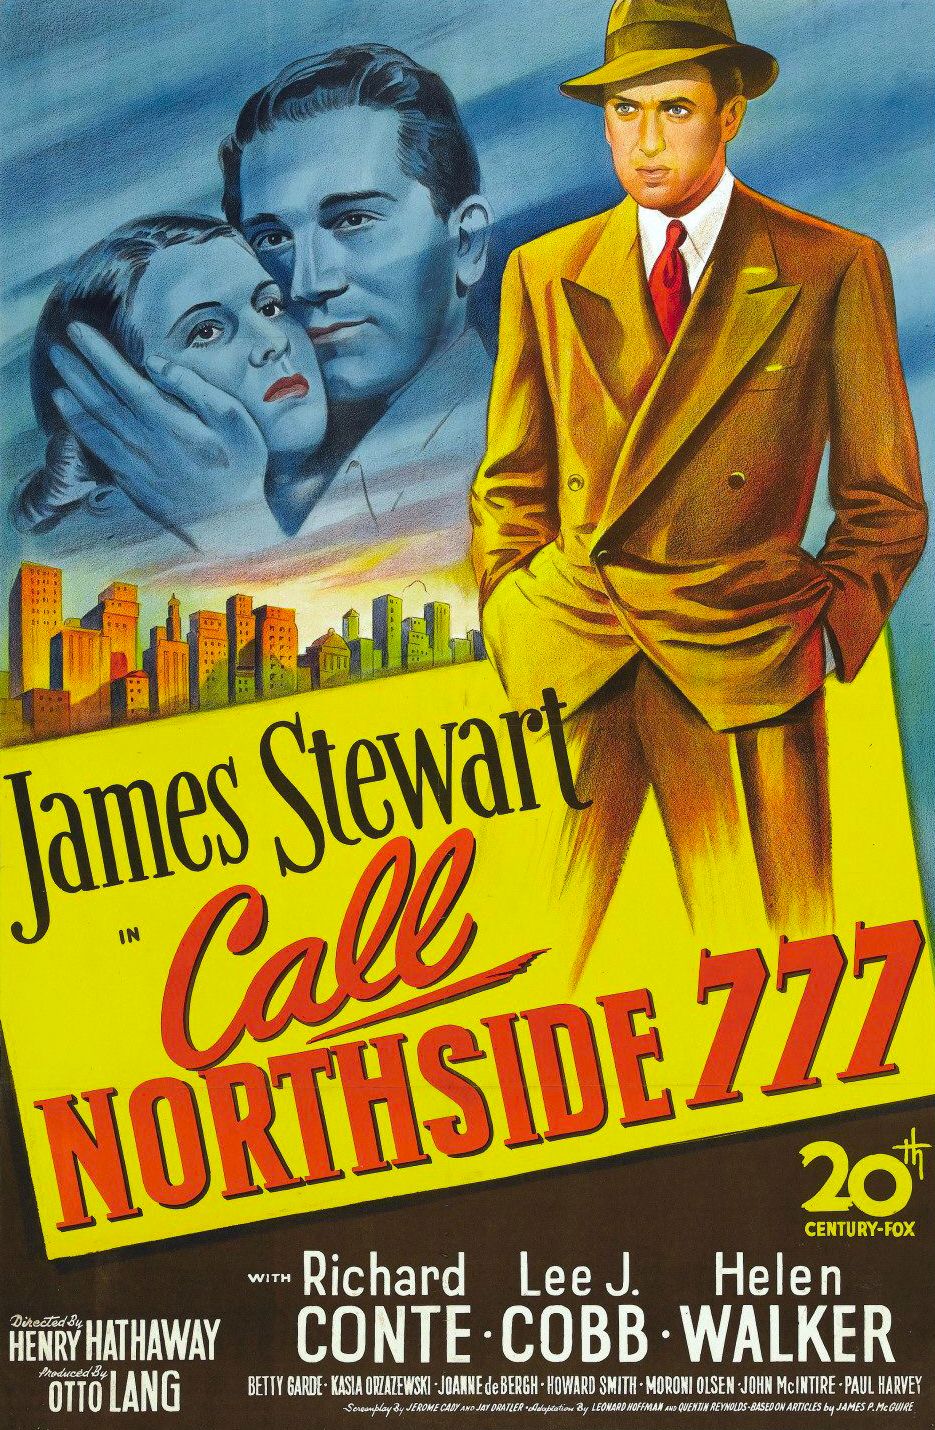 Call Northside 777